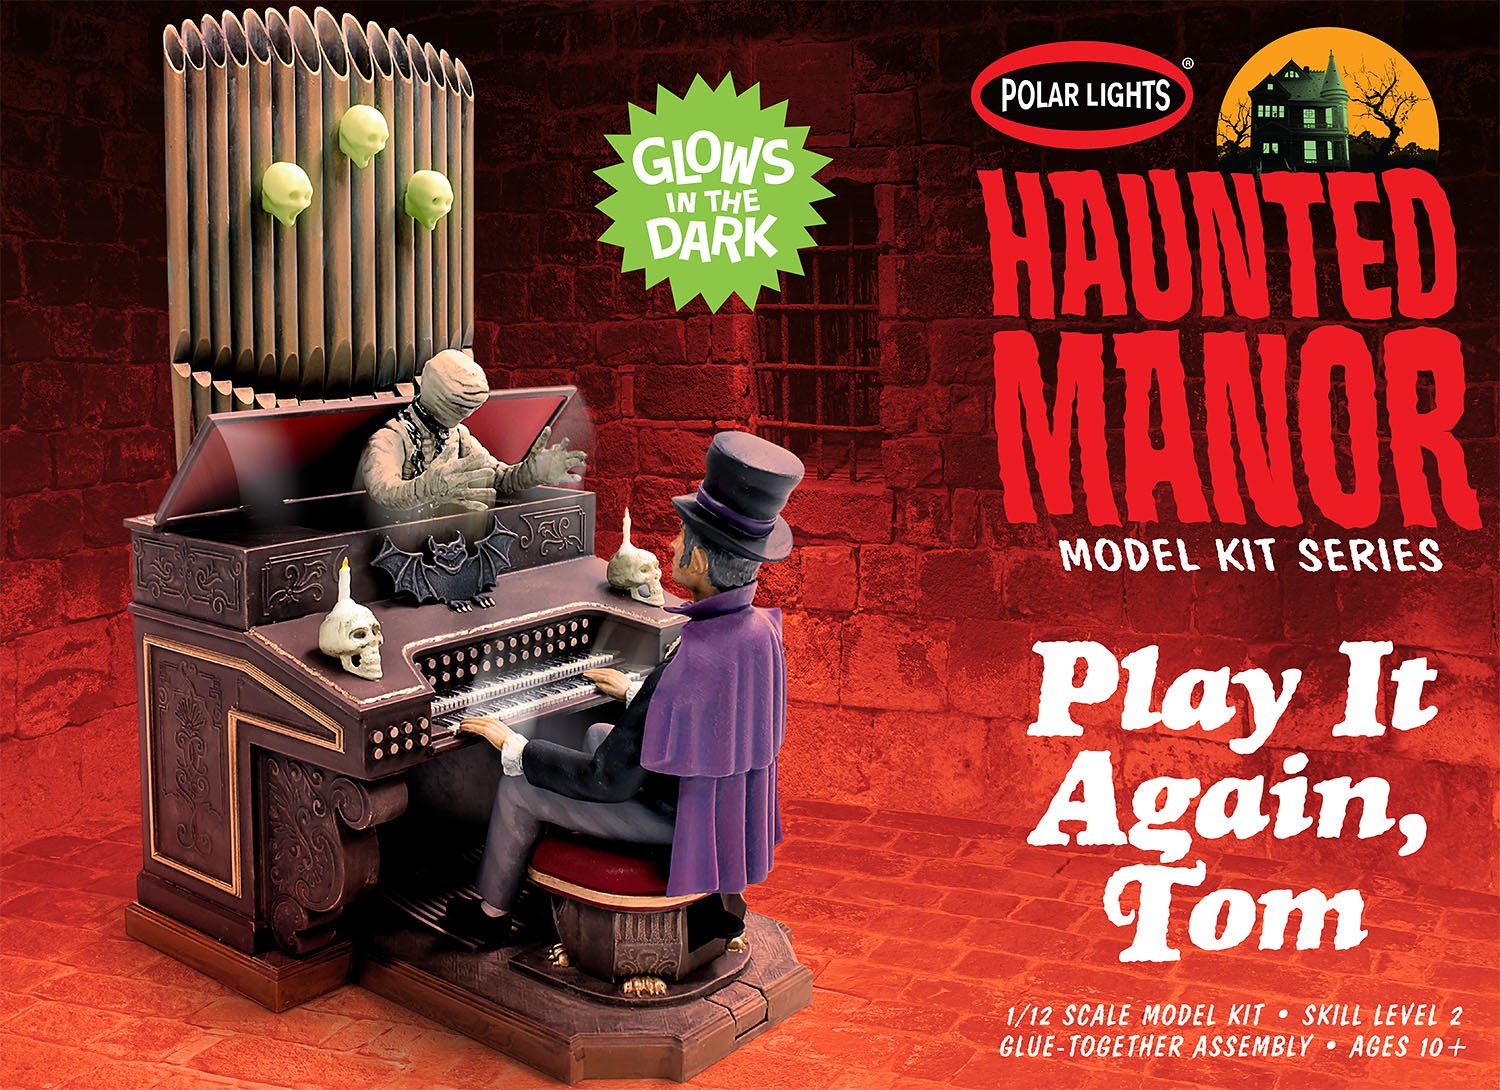 Polar Lights 1:12 Haunted Manor: Play ItAgain, Tom!